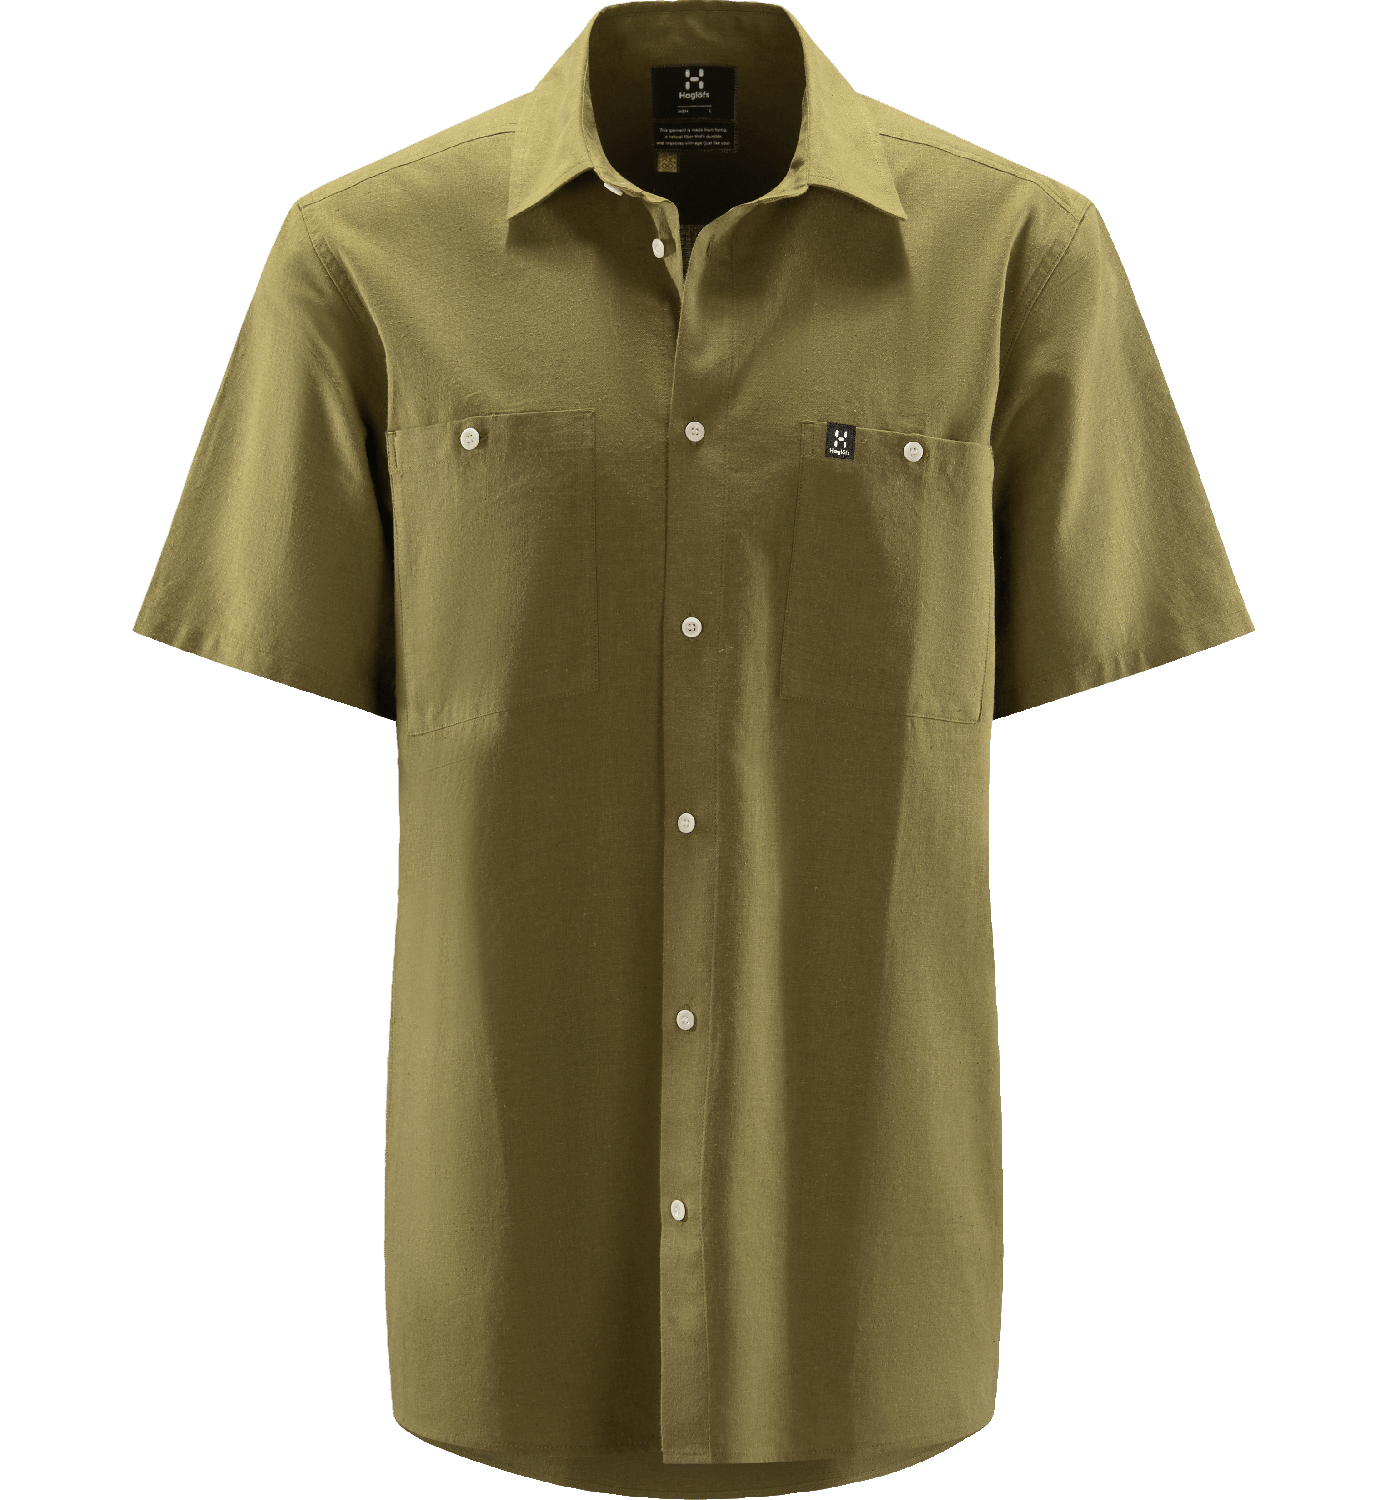 Haglöfs Men's Curious Hemp Short-Sleeve Shirt Olive Green